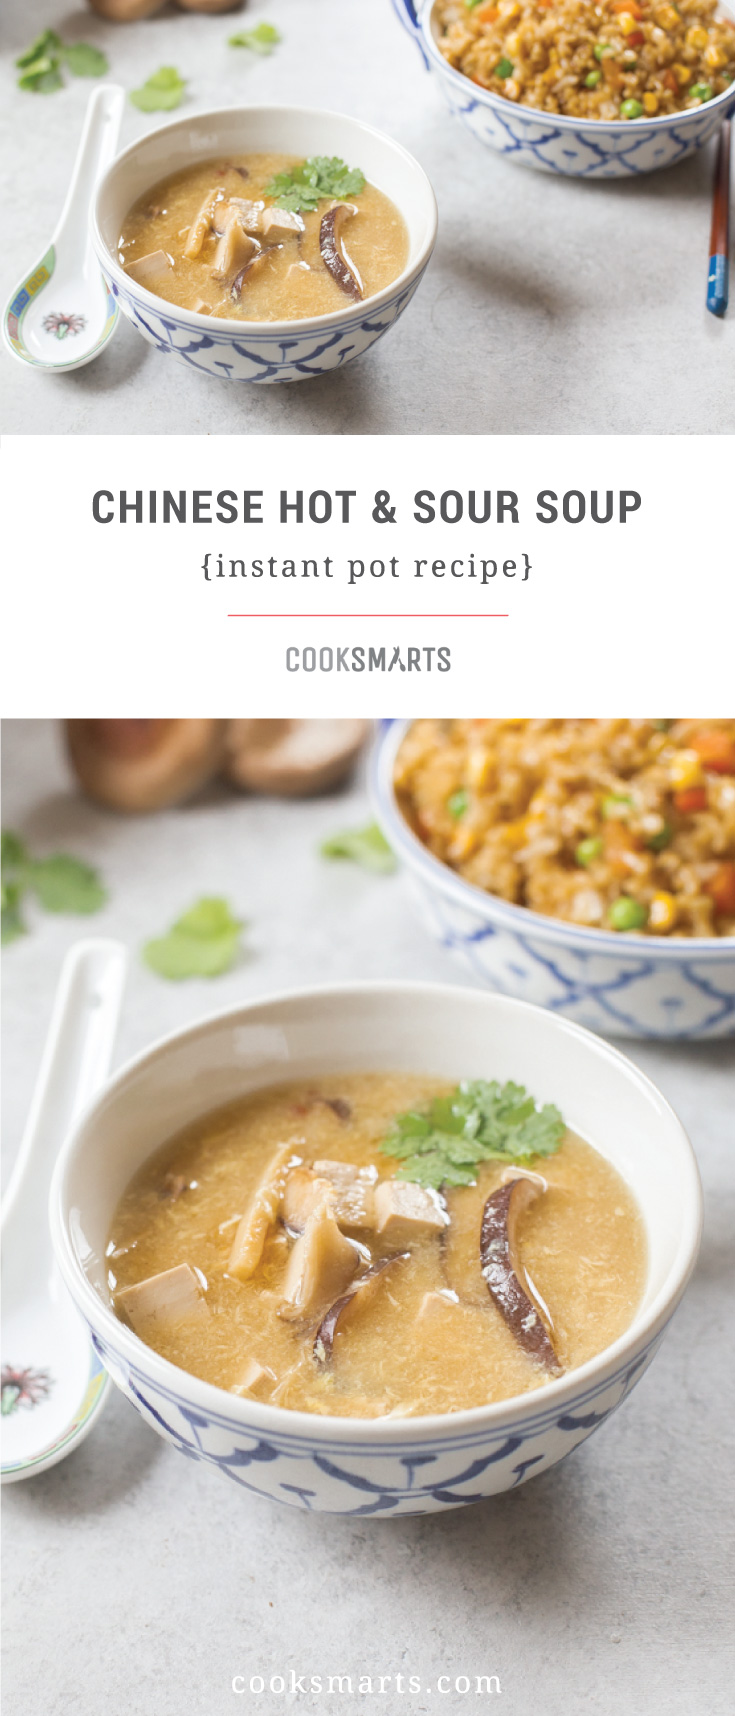 Easy Hot and Sour Soup Instant Pot Recipe via @cooksmarts